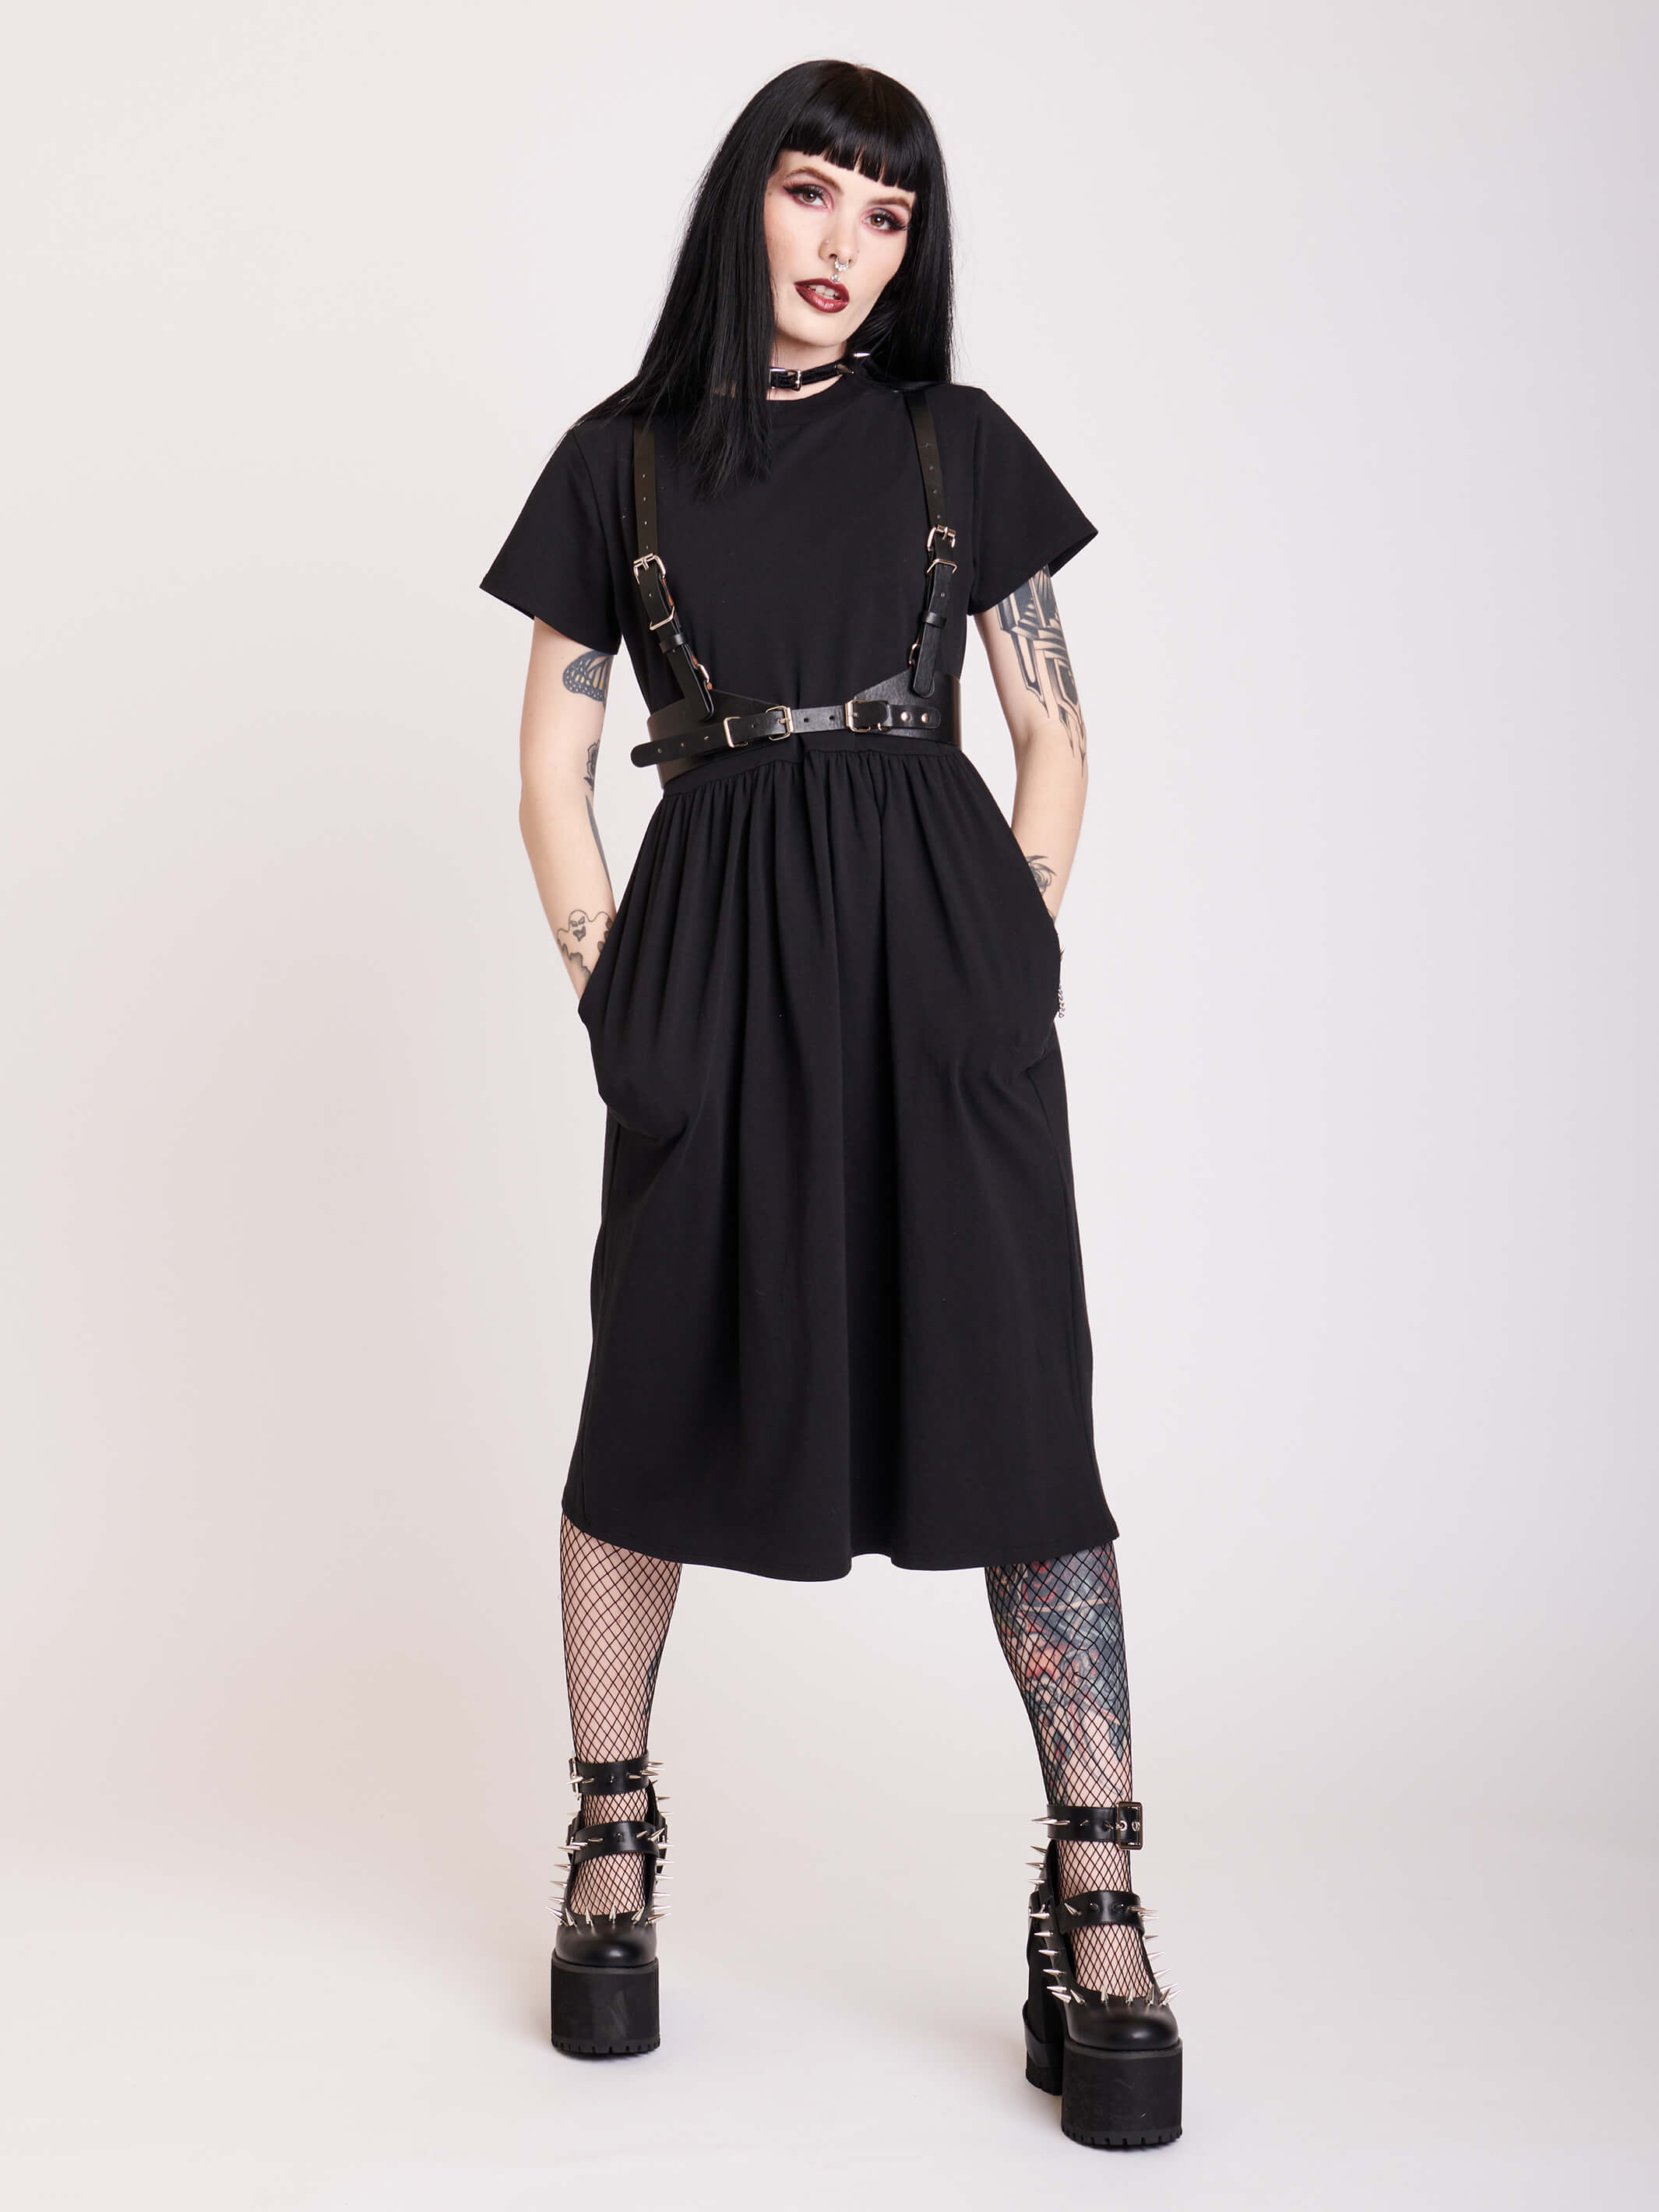 Black spine embroidered midi length dress.